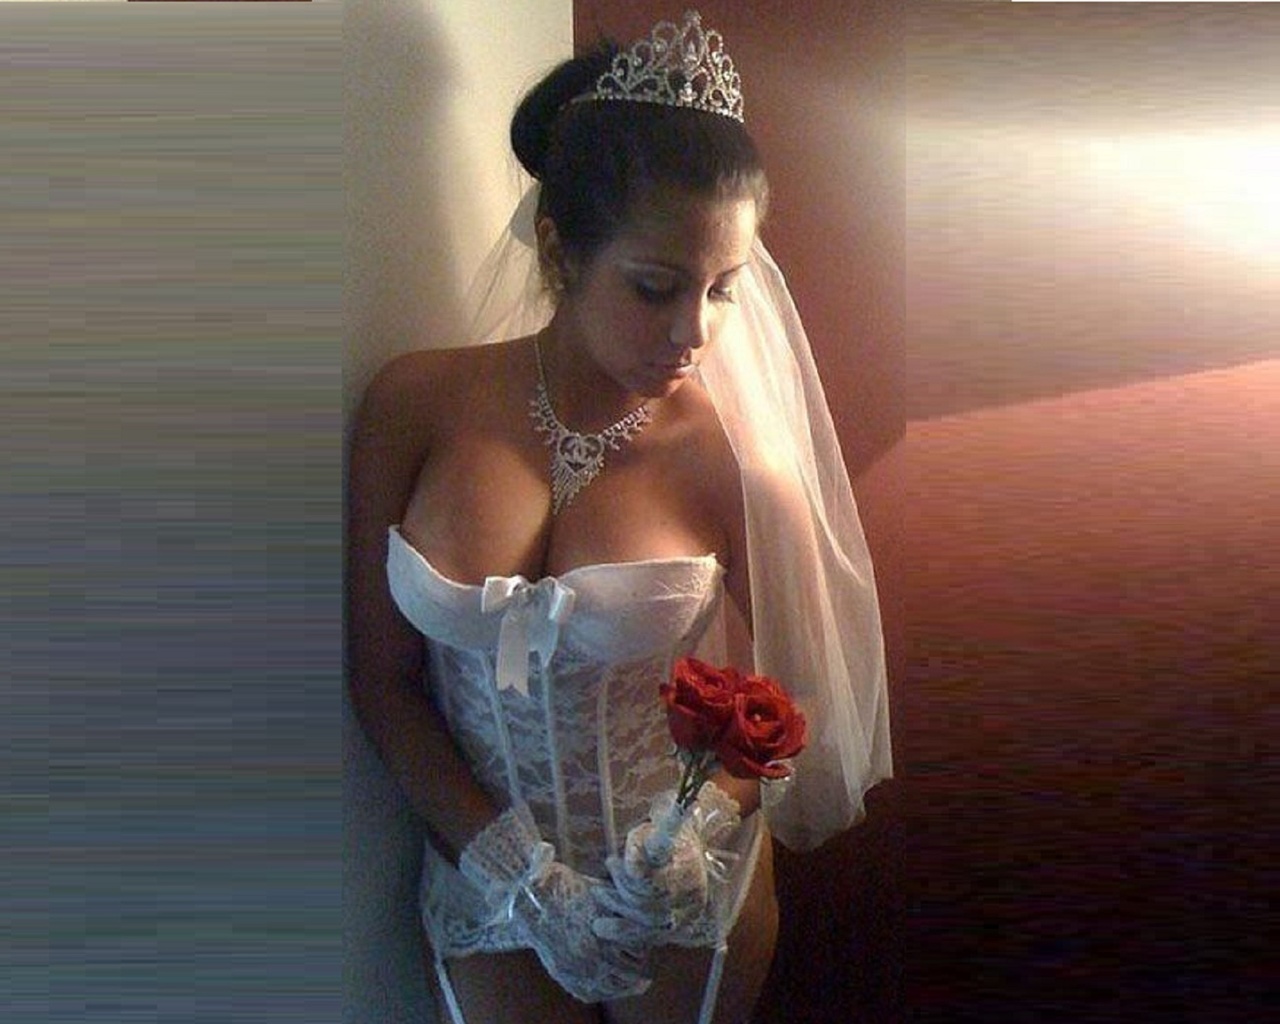 Sexy bridal shower pics